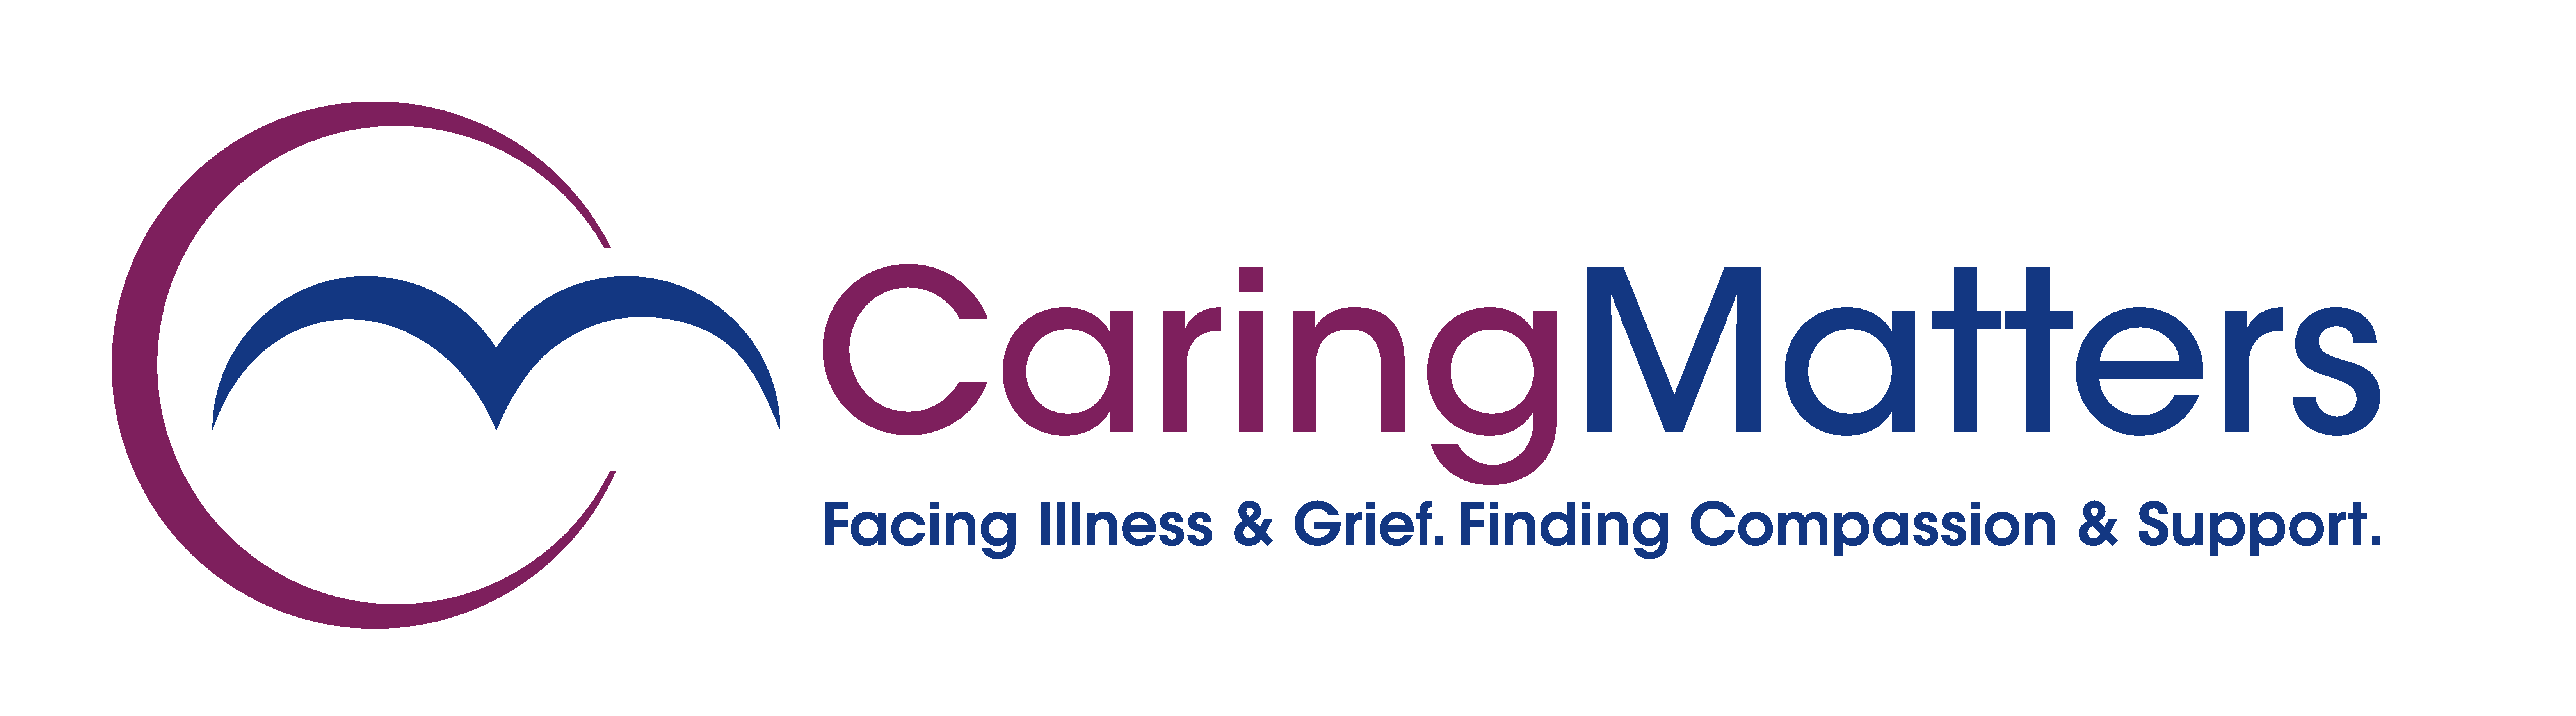 Caring Matters logo